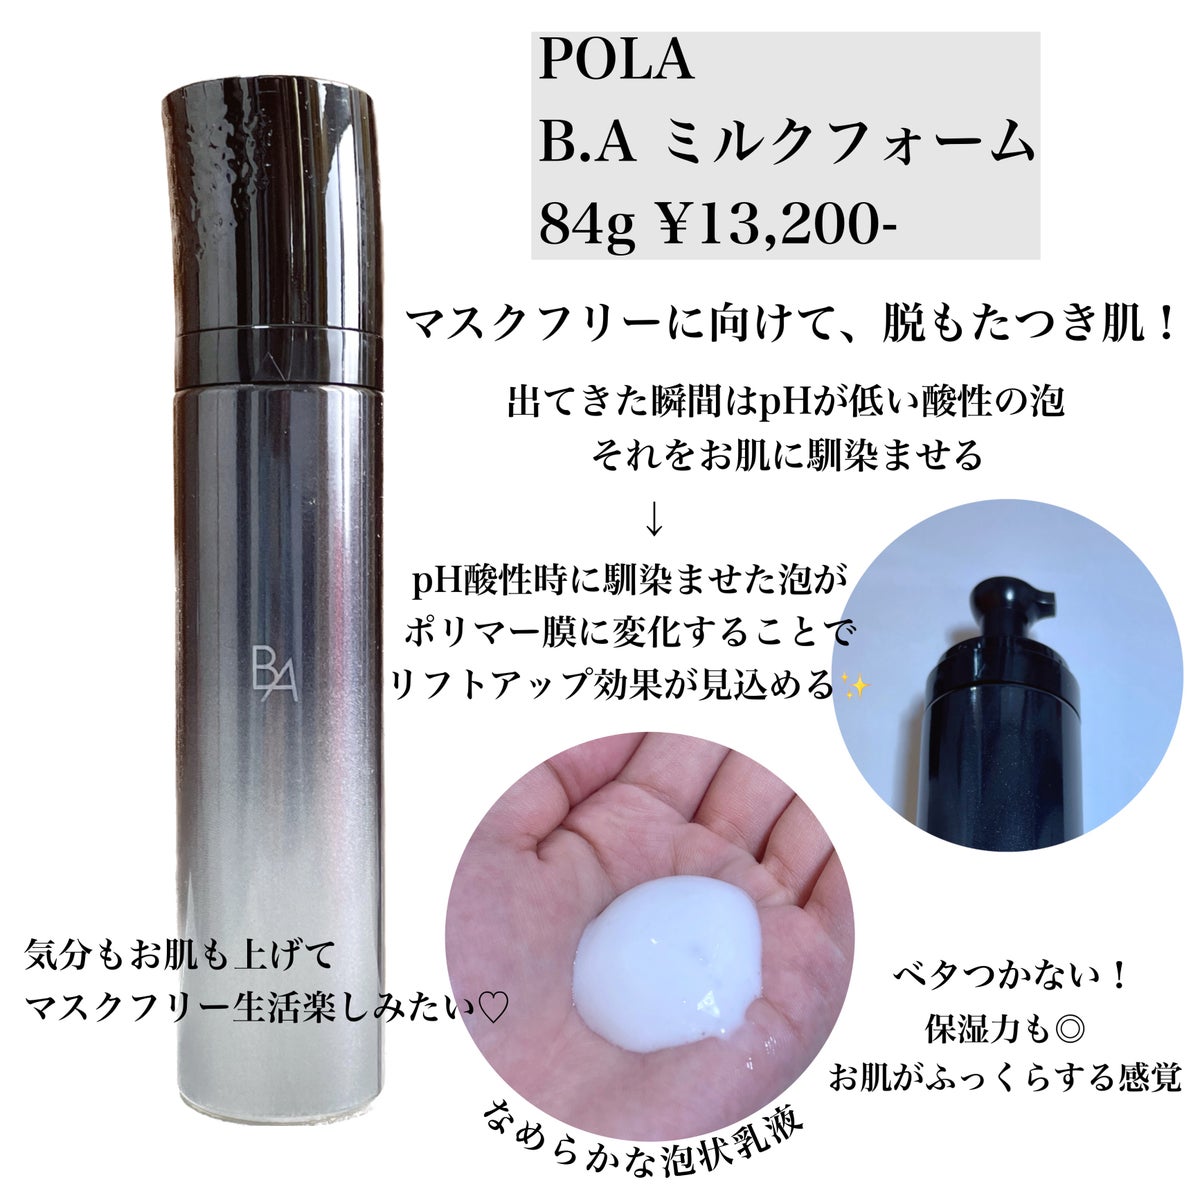 POLA BAローションイマースリフィル＆ミルクフォーム2本セット - 化粧